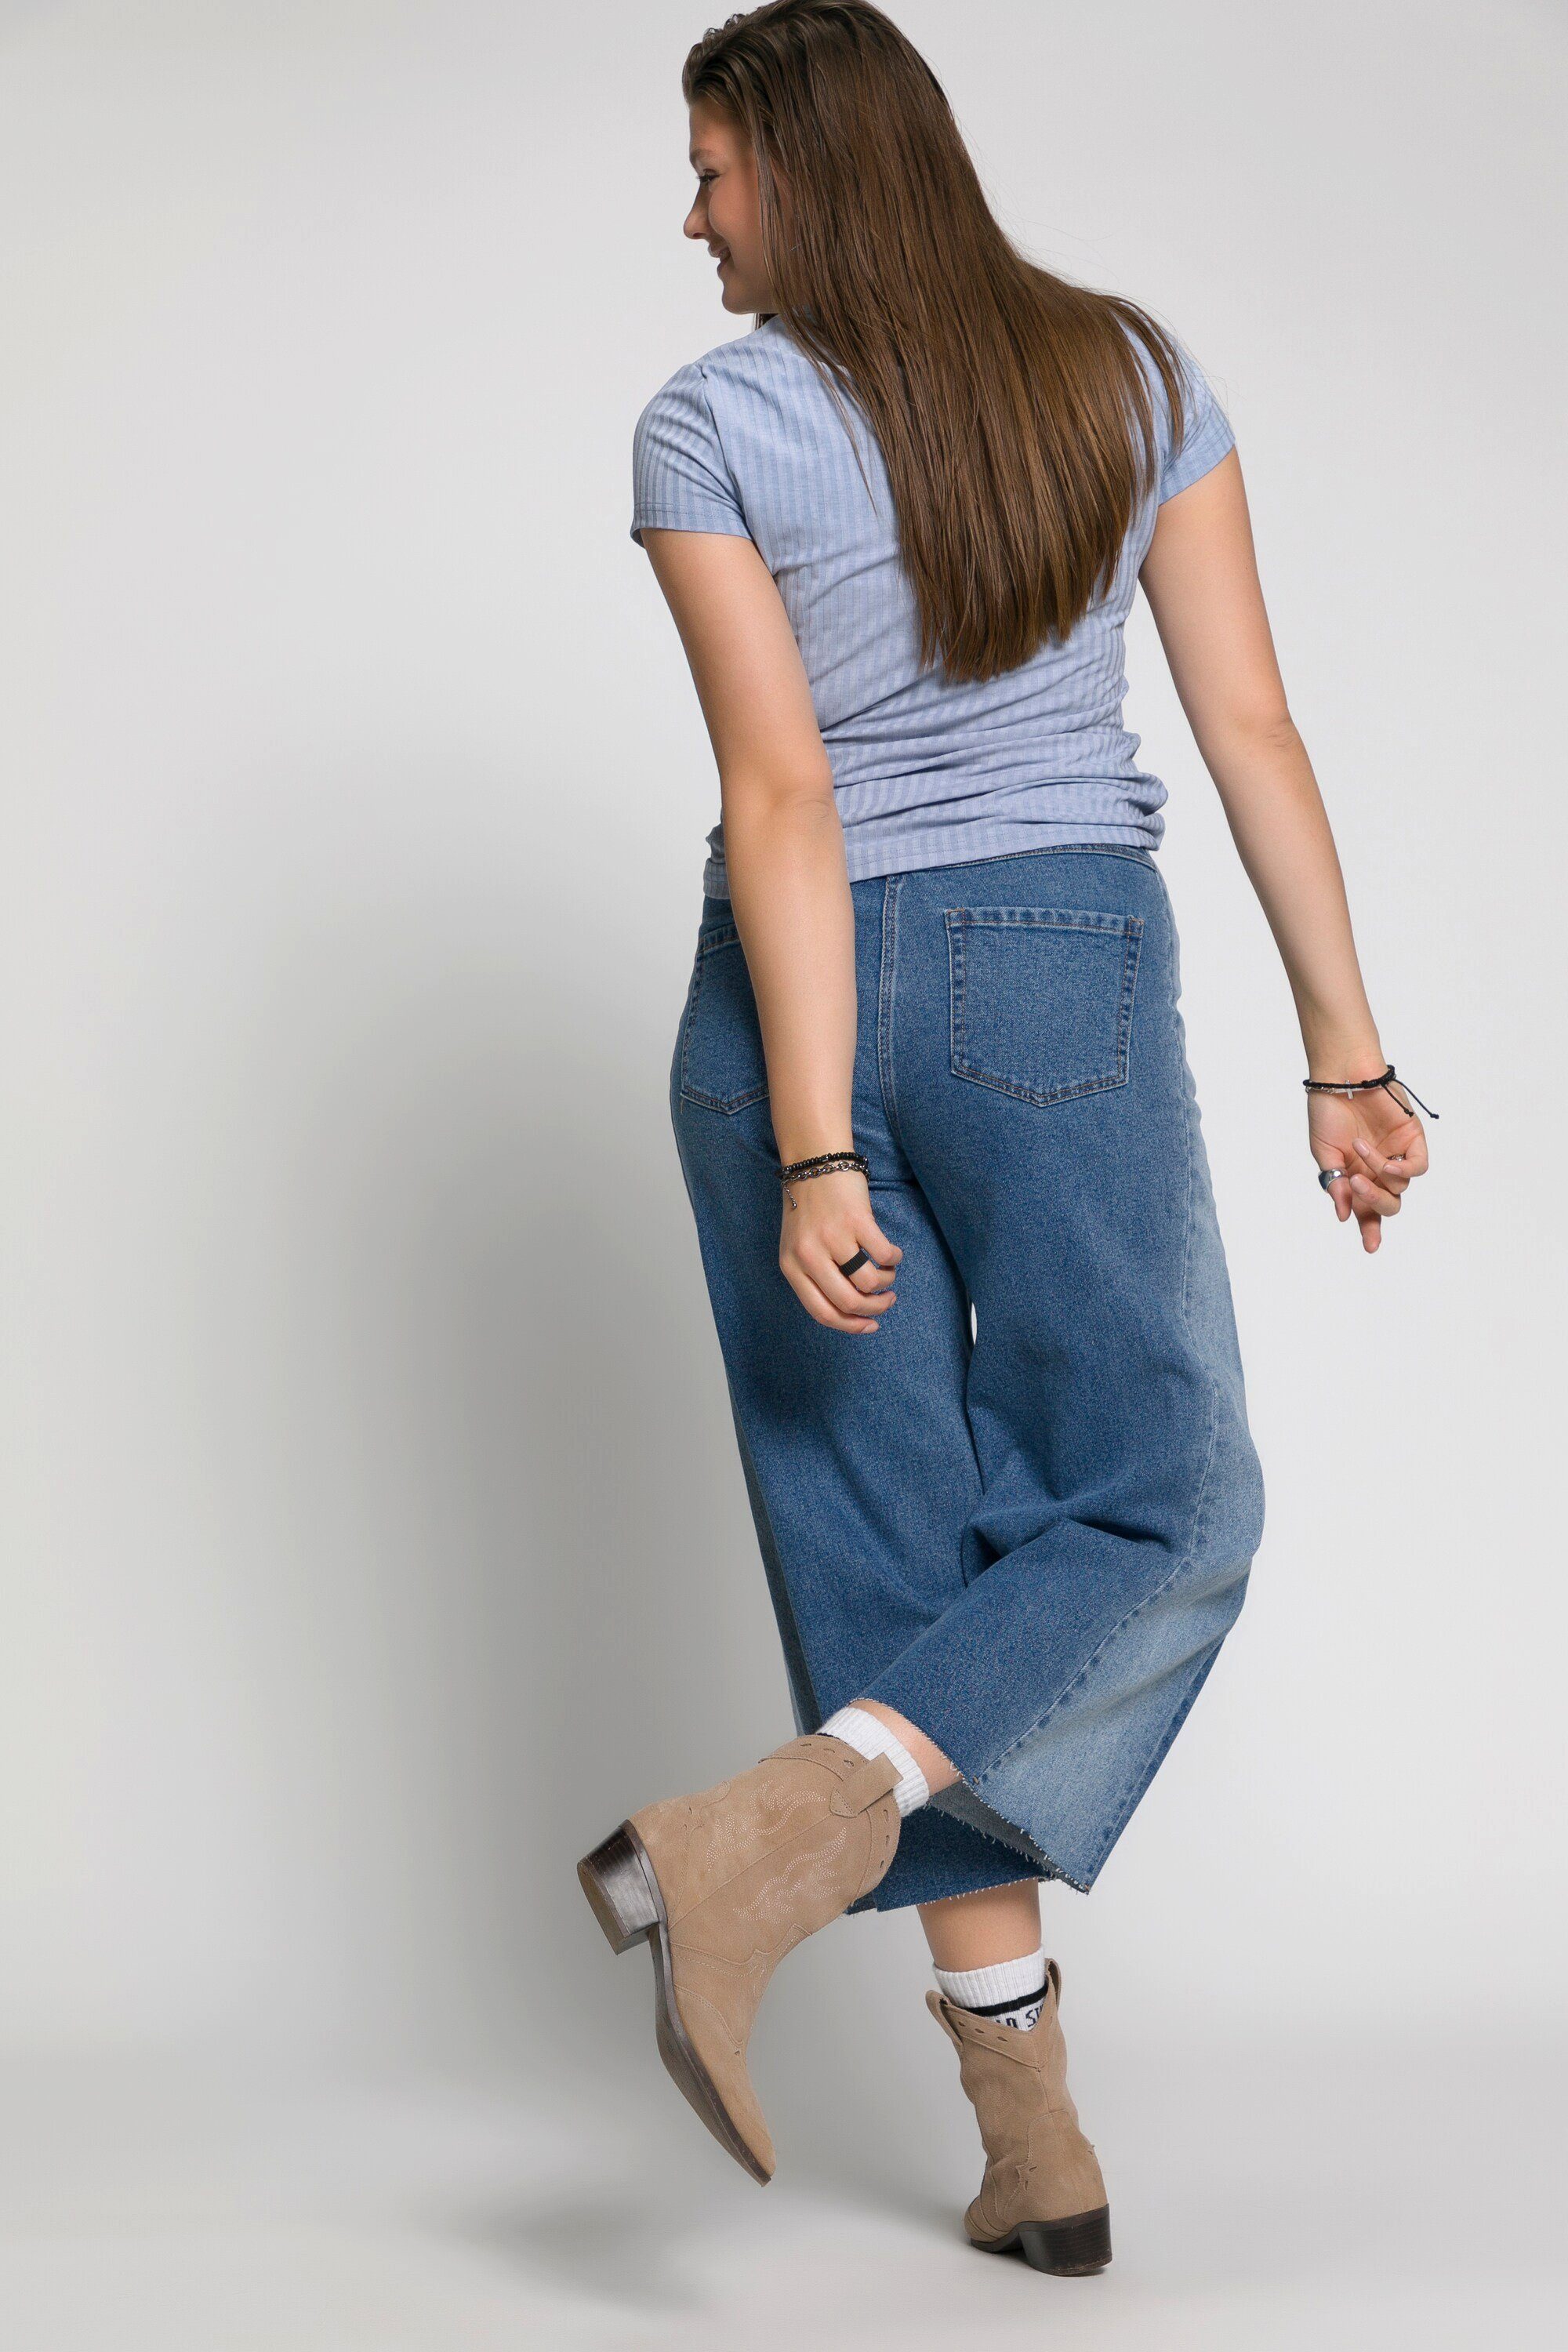 Culotte Culotte Studio Patch Fransensaum 5-Pocket Untold Look Jeans